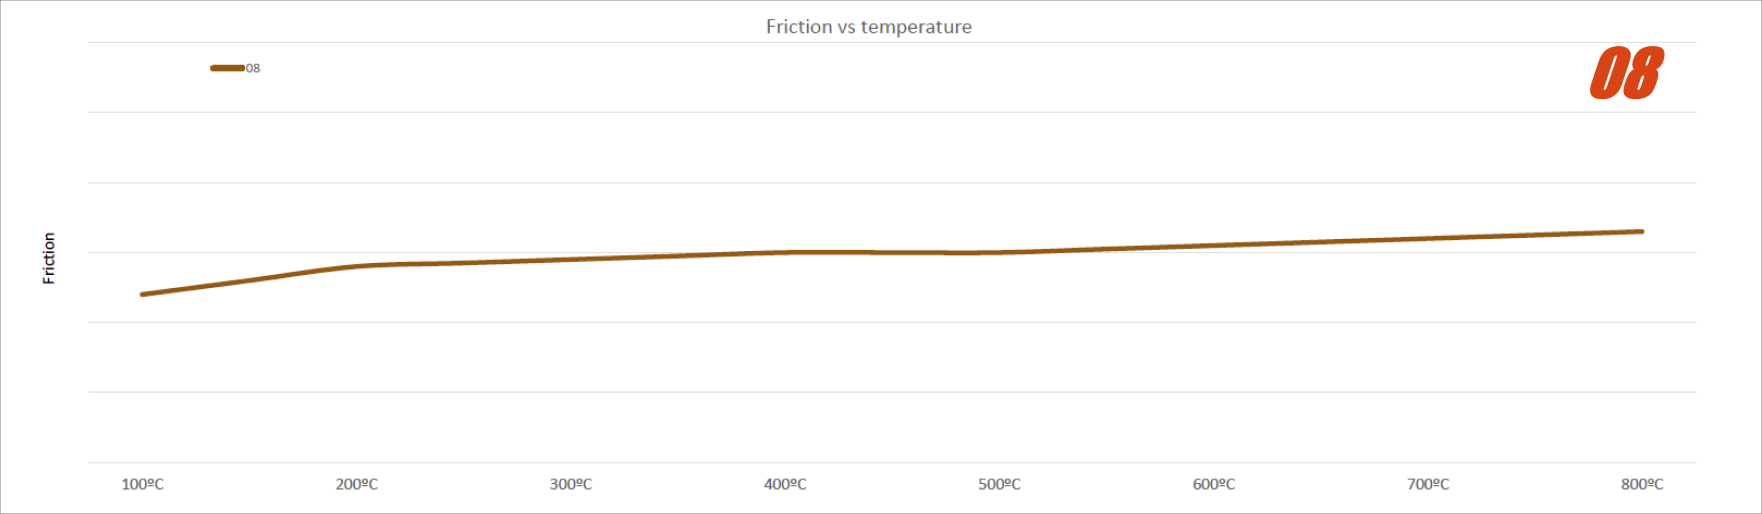 PFC 08 Compound Friction Vs Temperature